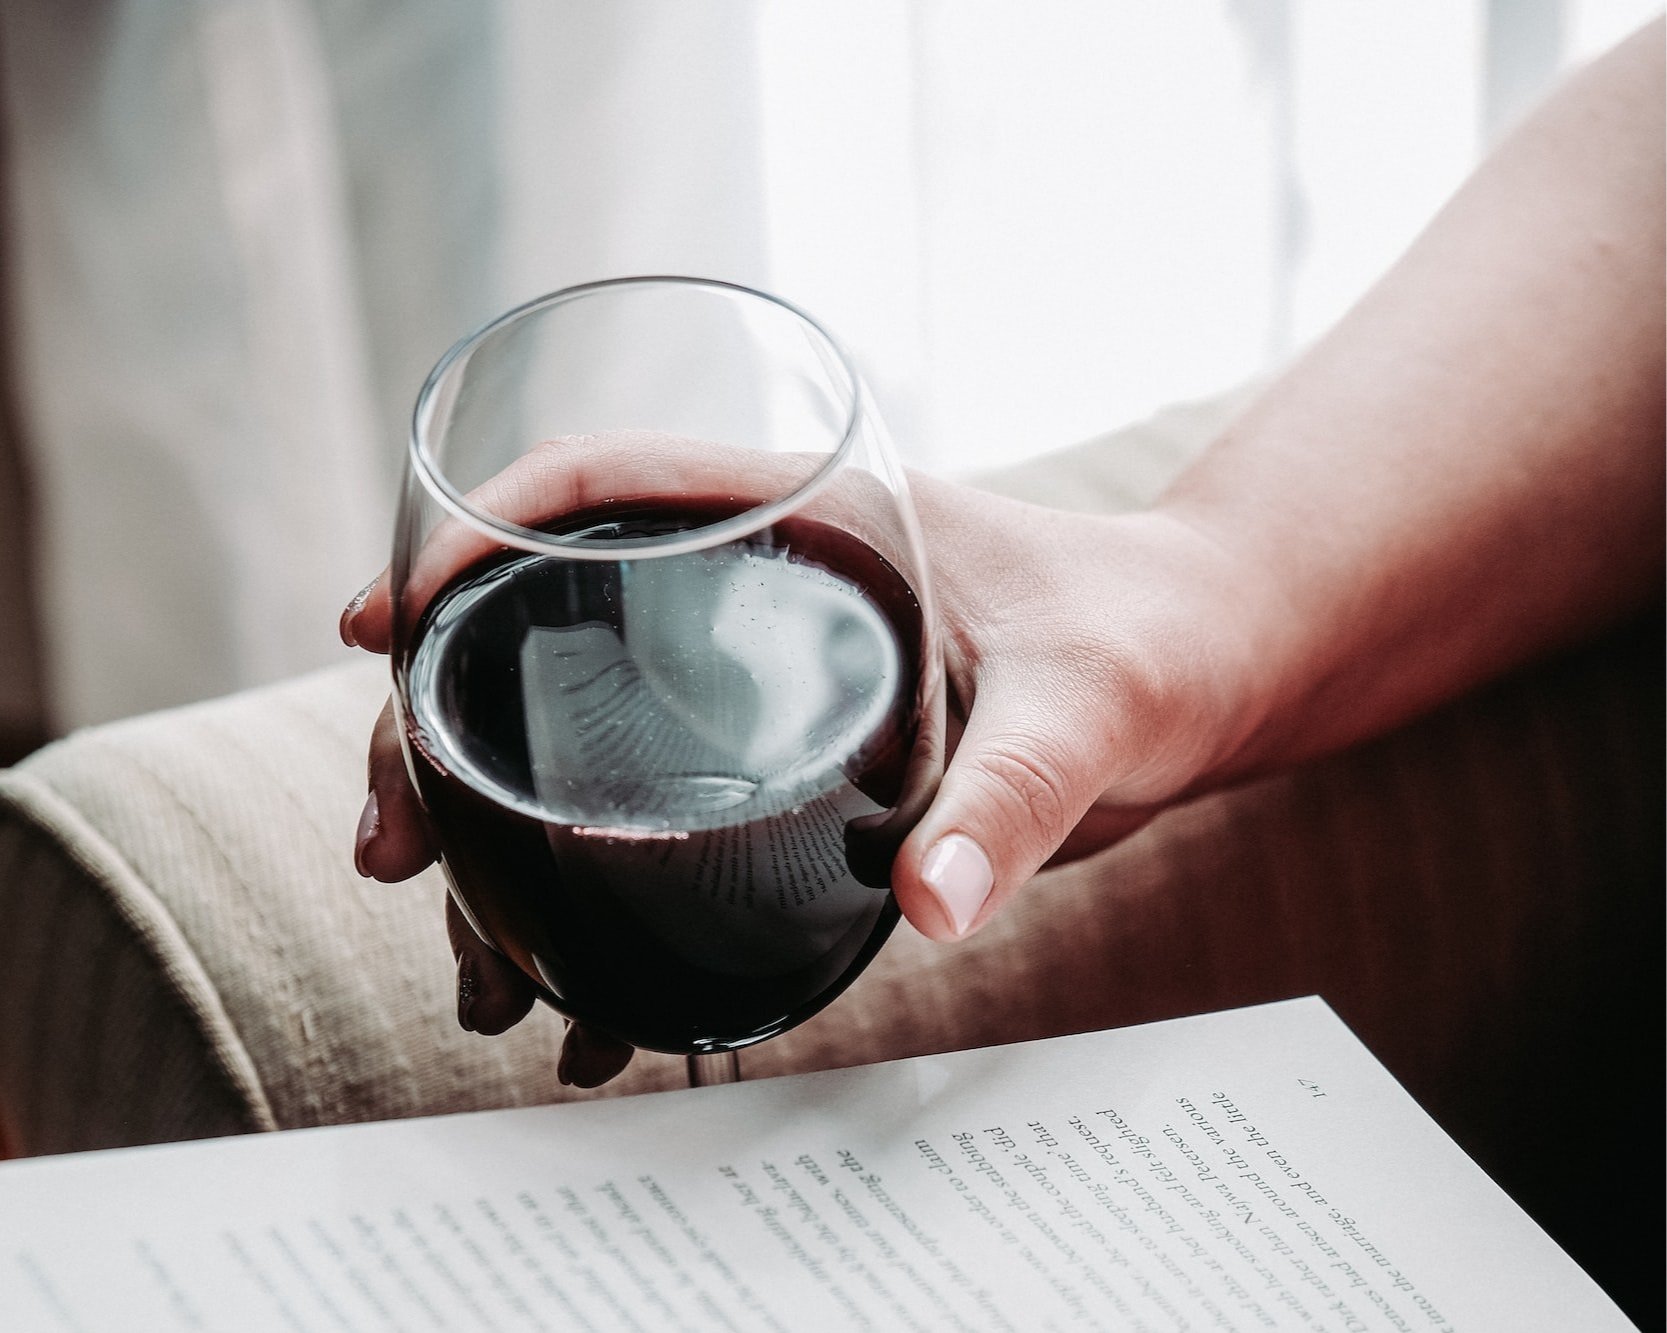 merlot wine price - red wine and reader